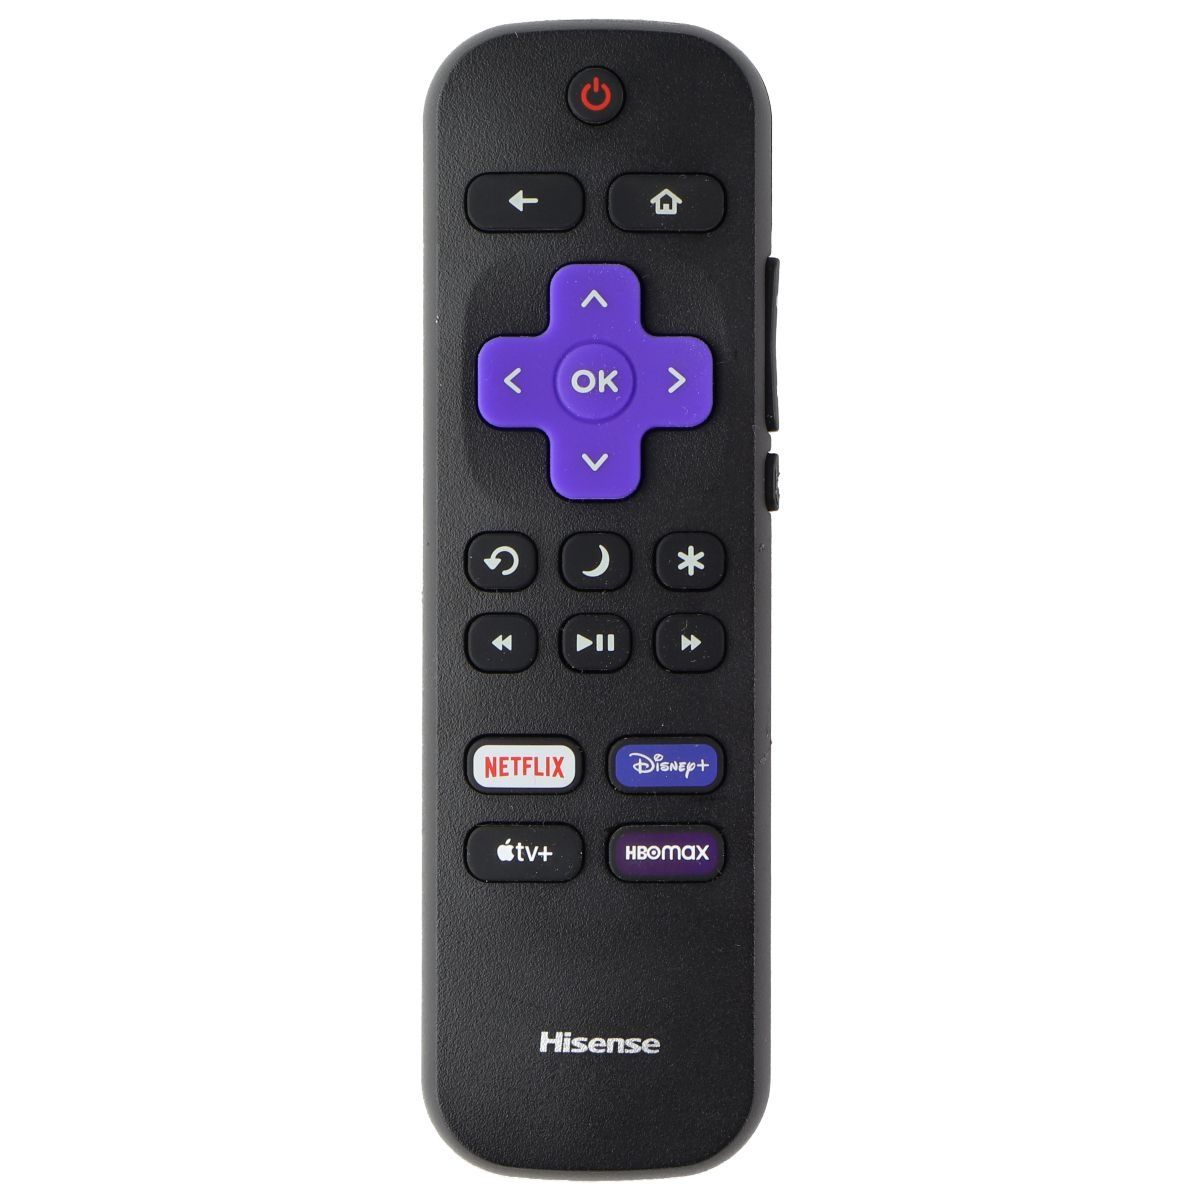 Hisense OEM Remote Control (RC-ALIR) with Netflix/Disney+/AppleTV/HBOMax Keys TV, Video & Audio Accessories - Remote Controls Hisense    - Simple Cell Bulk Wholesale Pricing - USA Seller